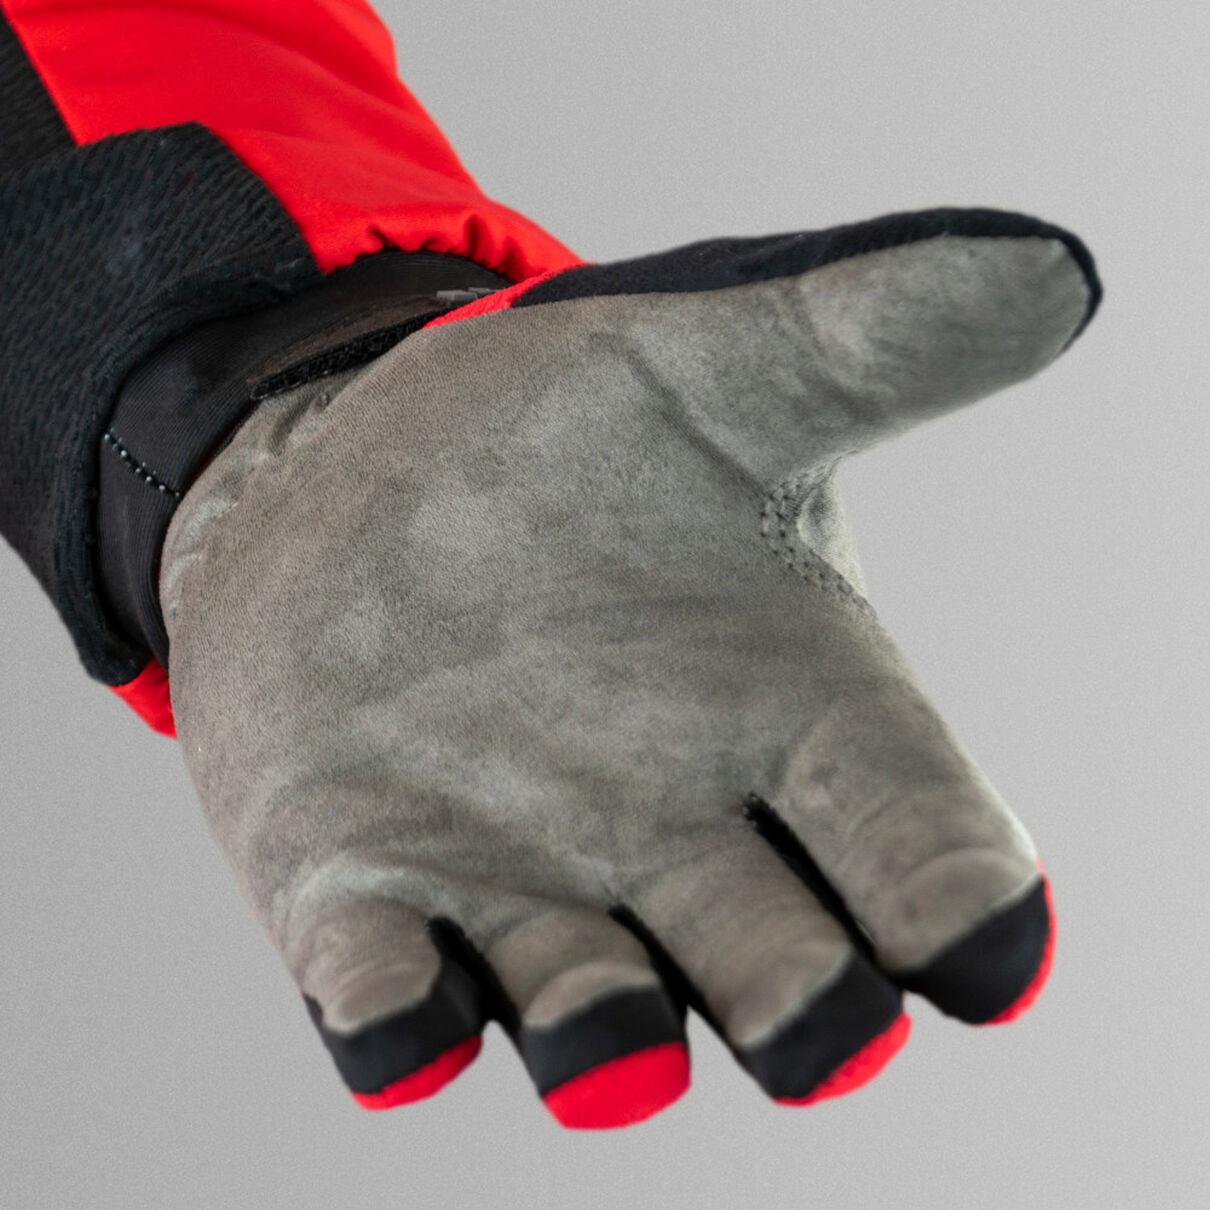 Hebo Trials Glove Nano Pro Red